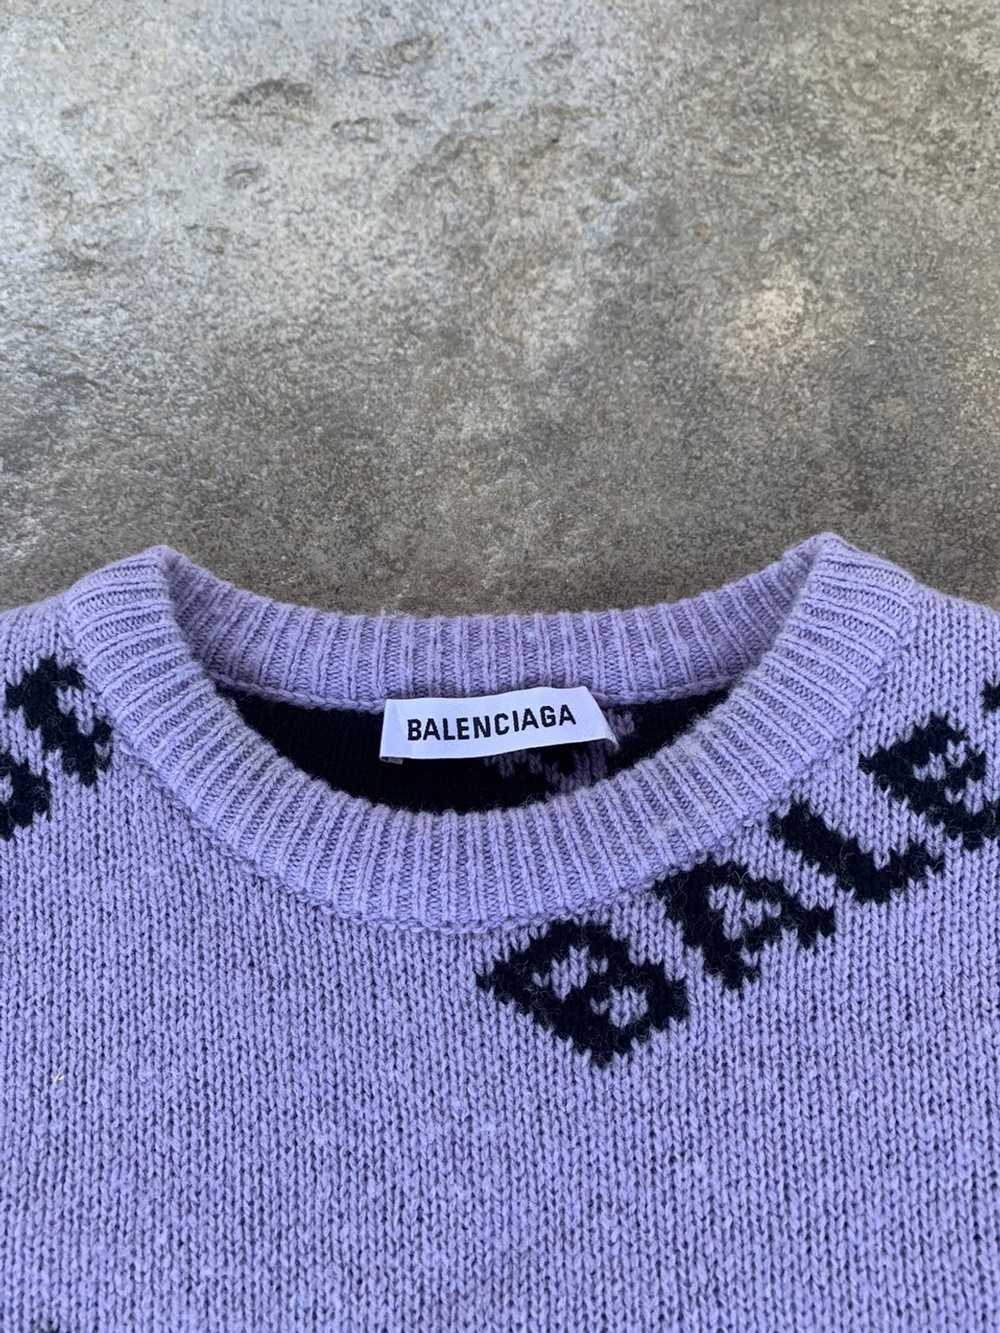 Balenciaga All Over Print Sweater - image 3